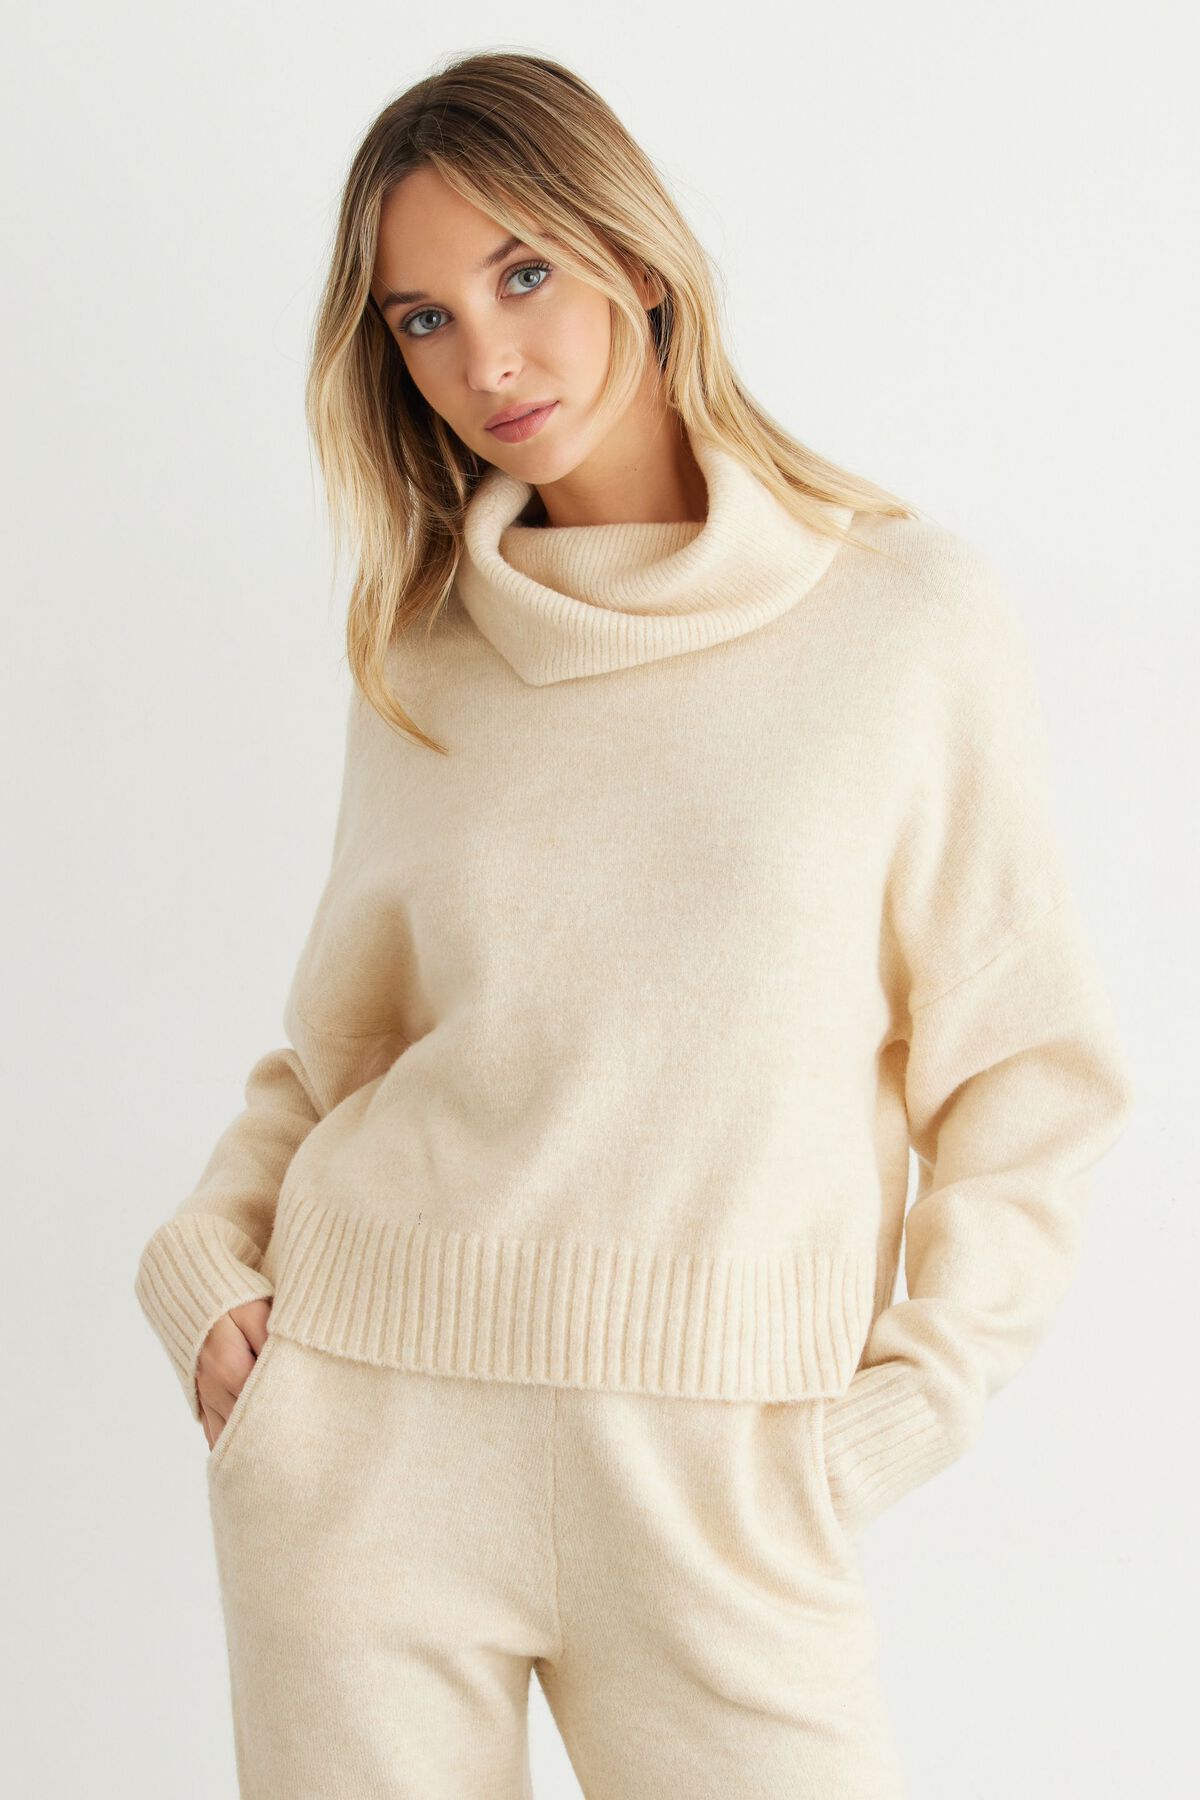 Dynamite Long Sleeve Textured Turtleneck Sweater. 3